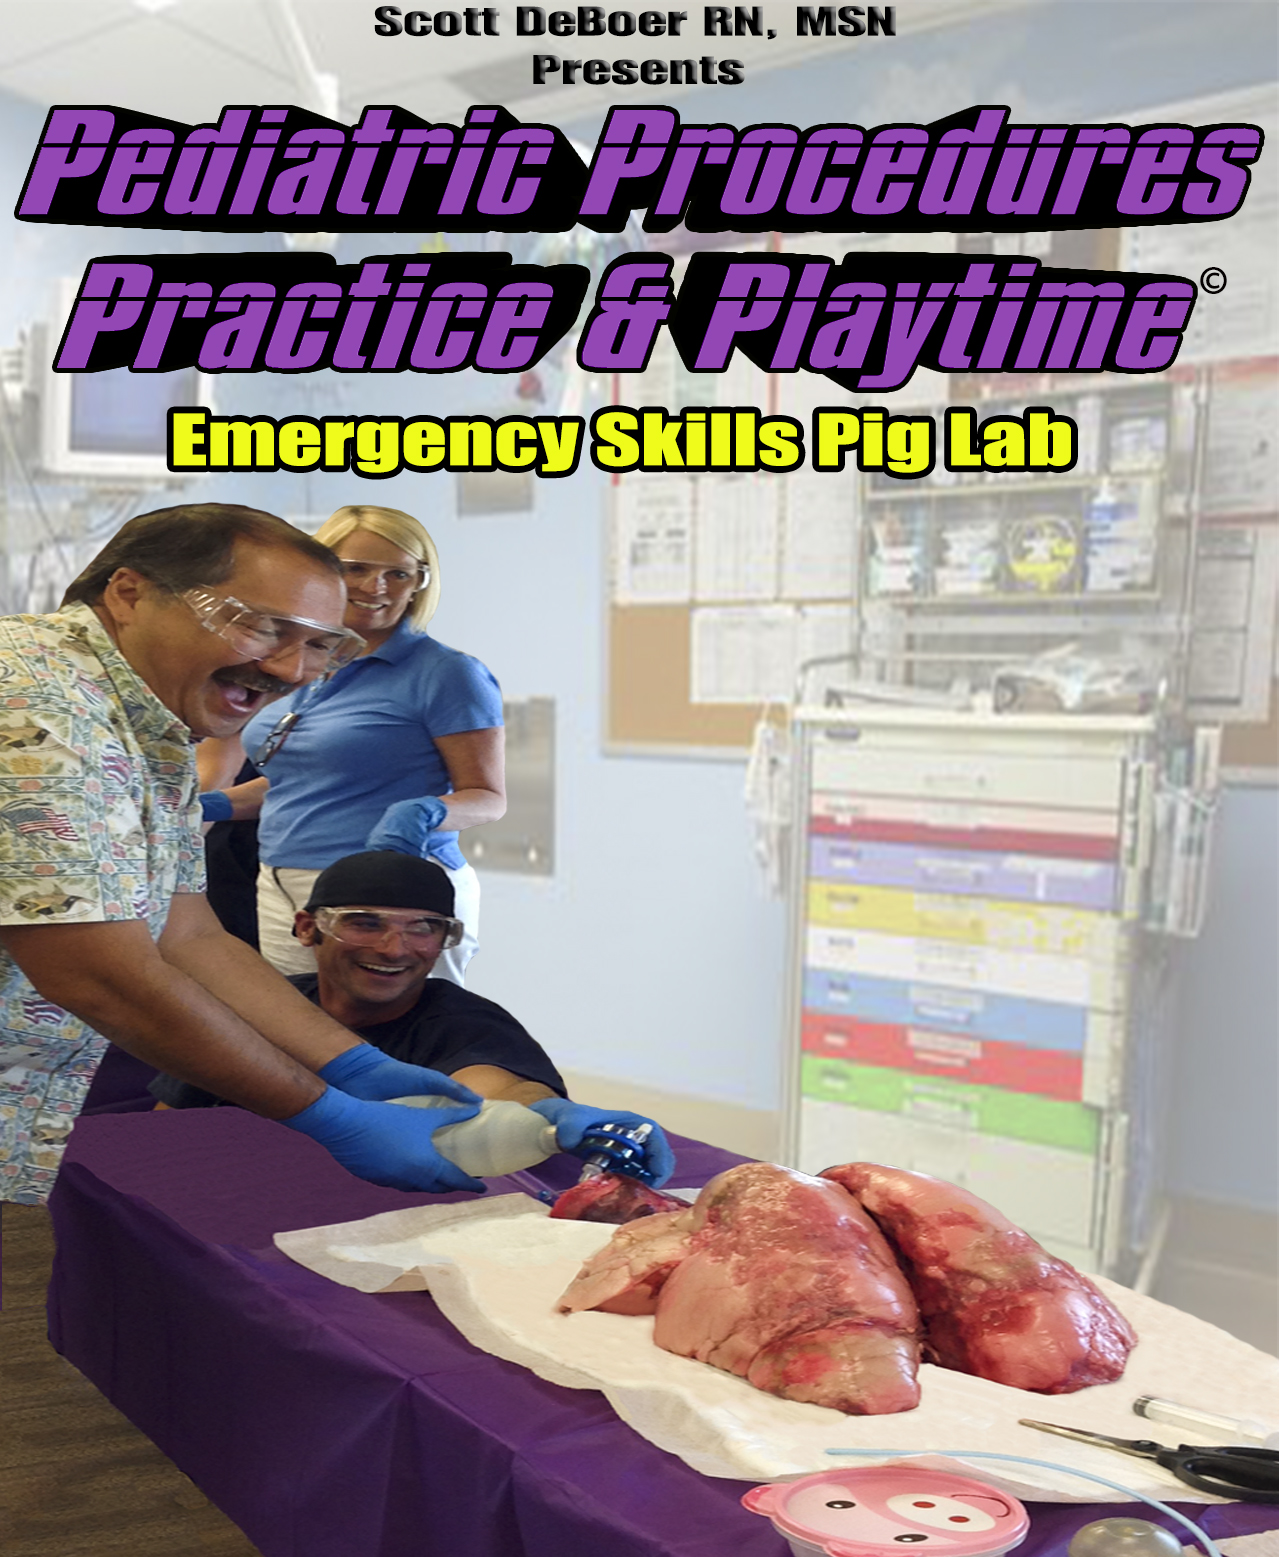 Pediatric Procedures, Practice & Playtime